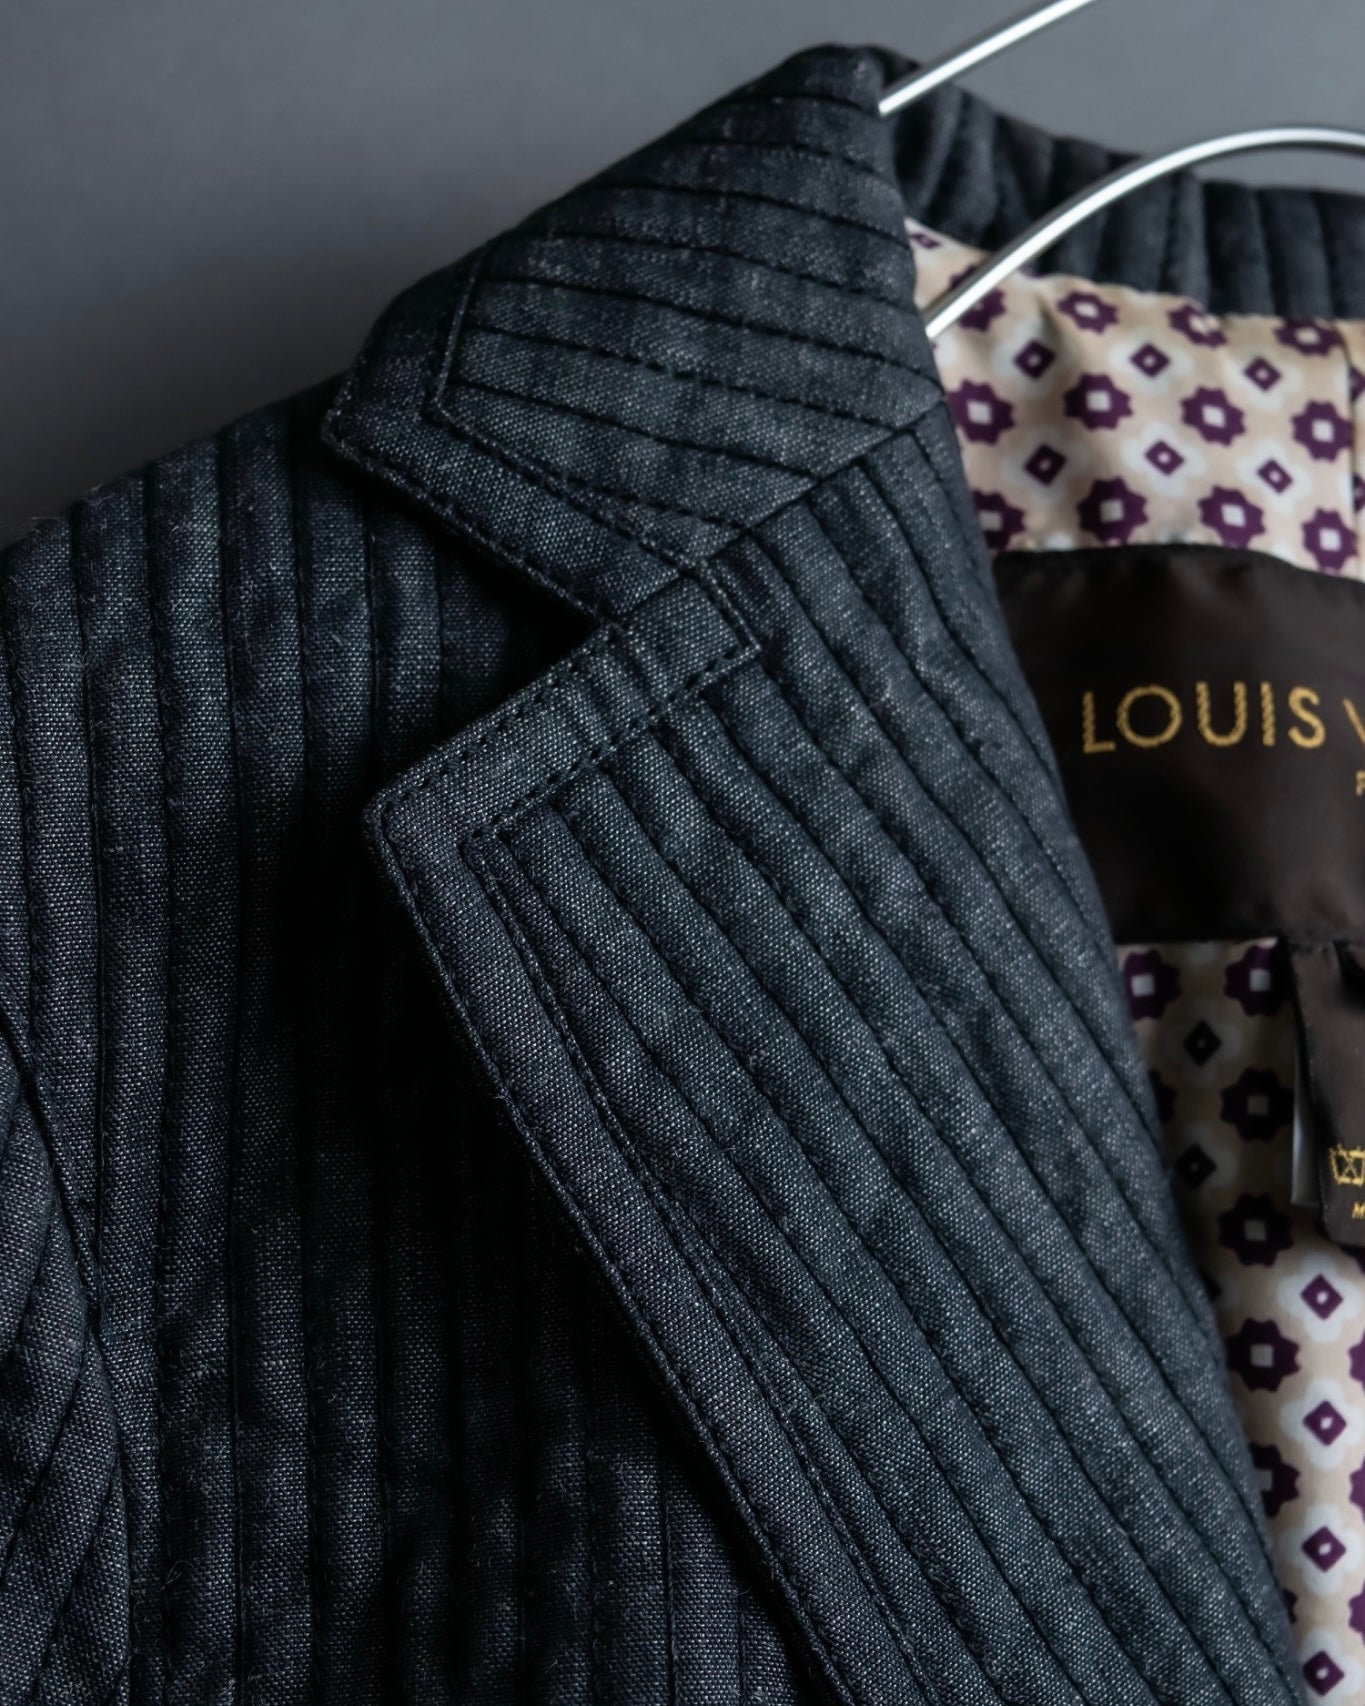 "LOUIS VUITTON "Cotton corduroy single tailored jacket